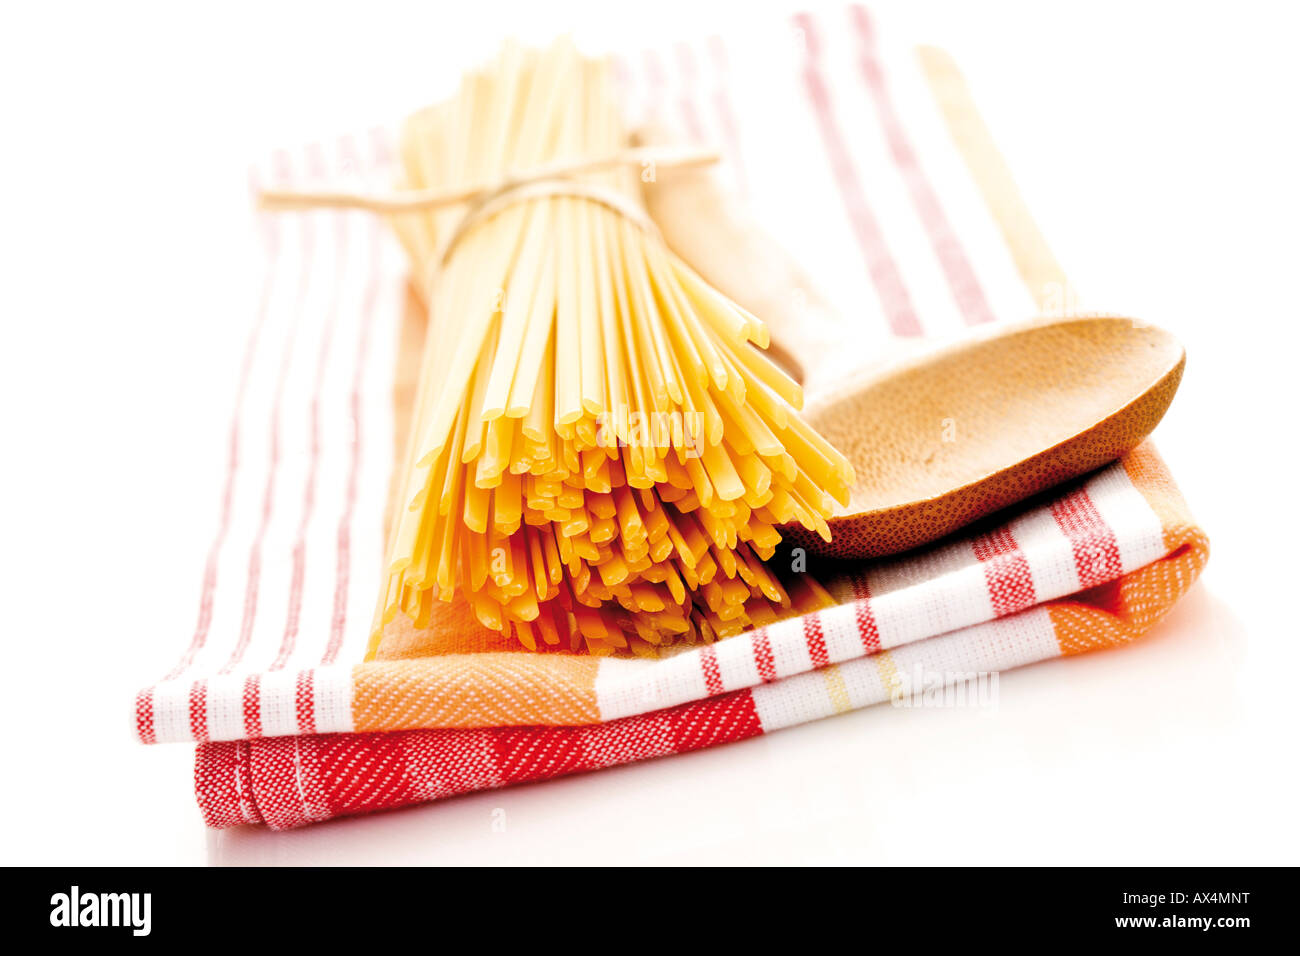 https://c8.alamy.com/comp/AX4MNT/bunch-of-pasta-on-dish-cloth-close-up-AX4MNT.jpg